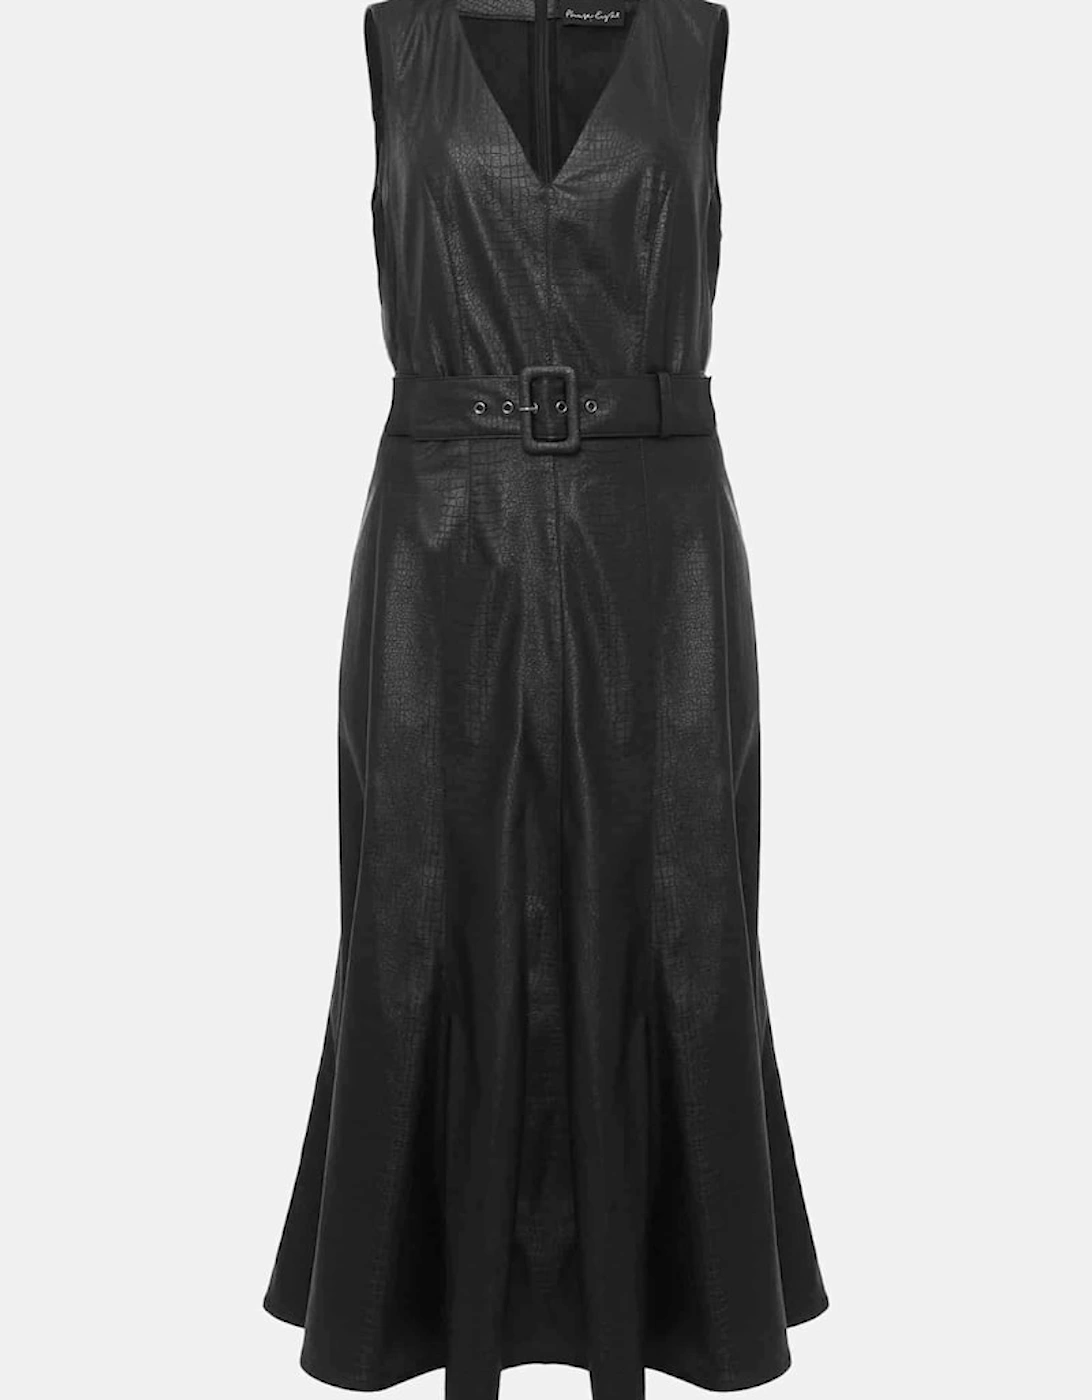 Khloe Black Faux Leather Midi Dress